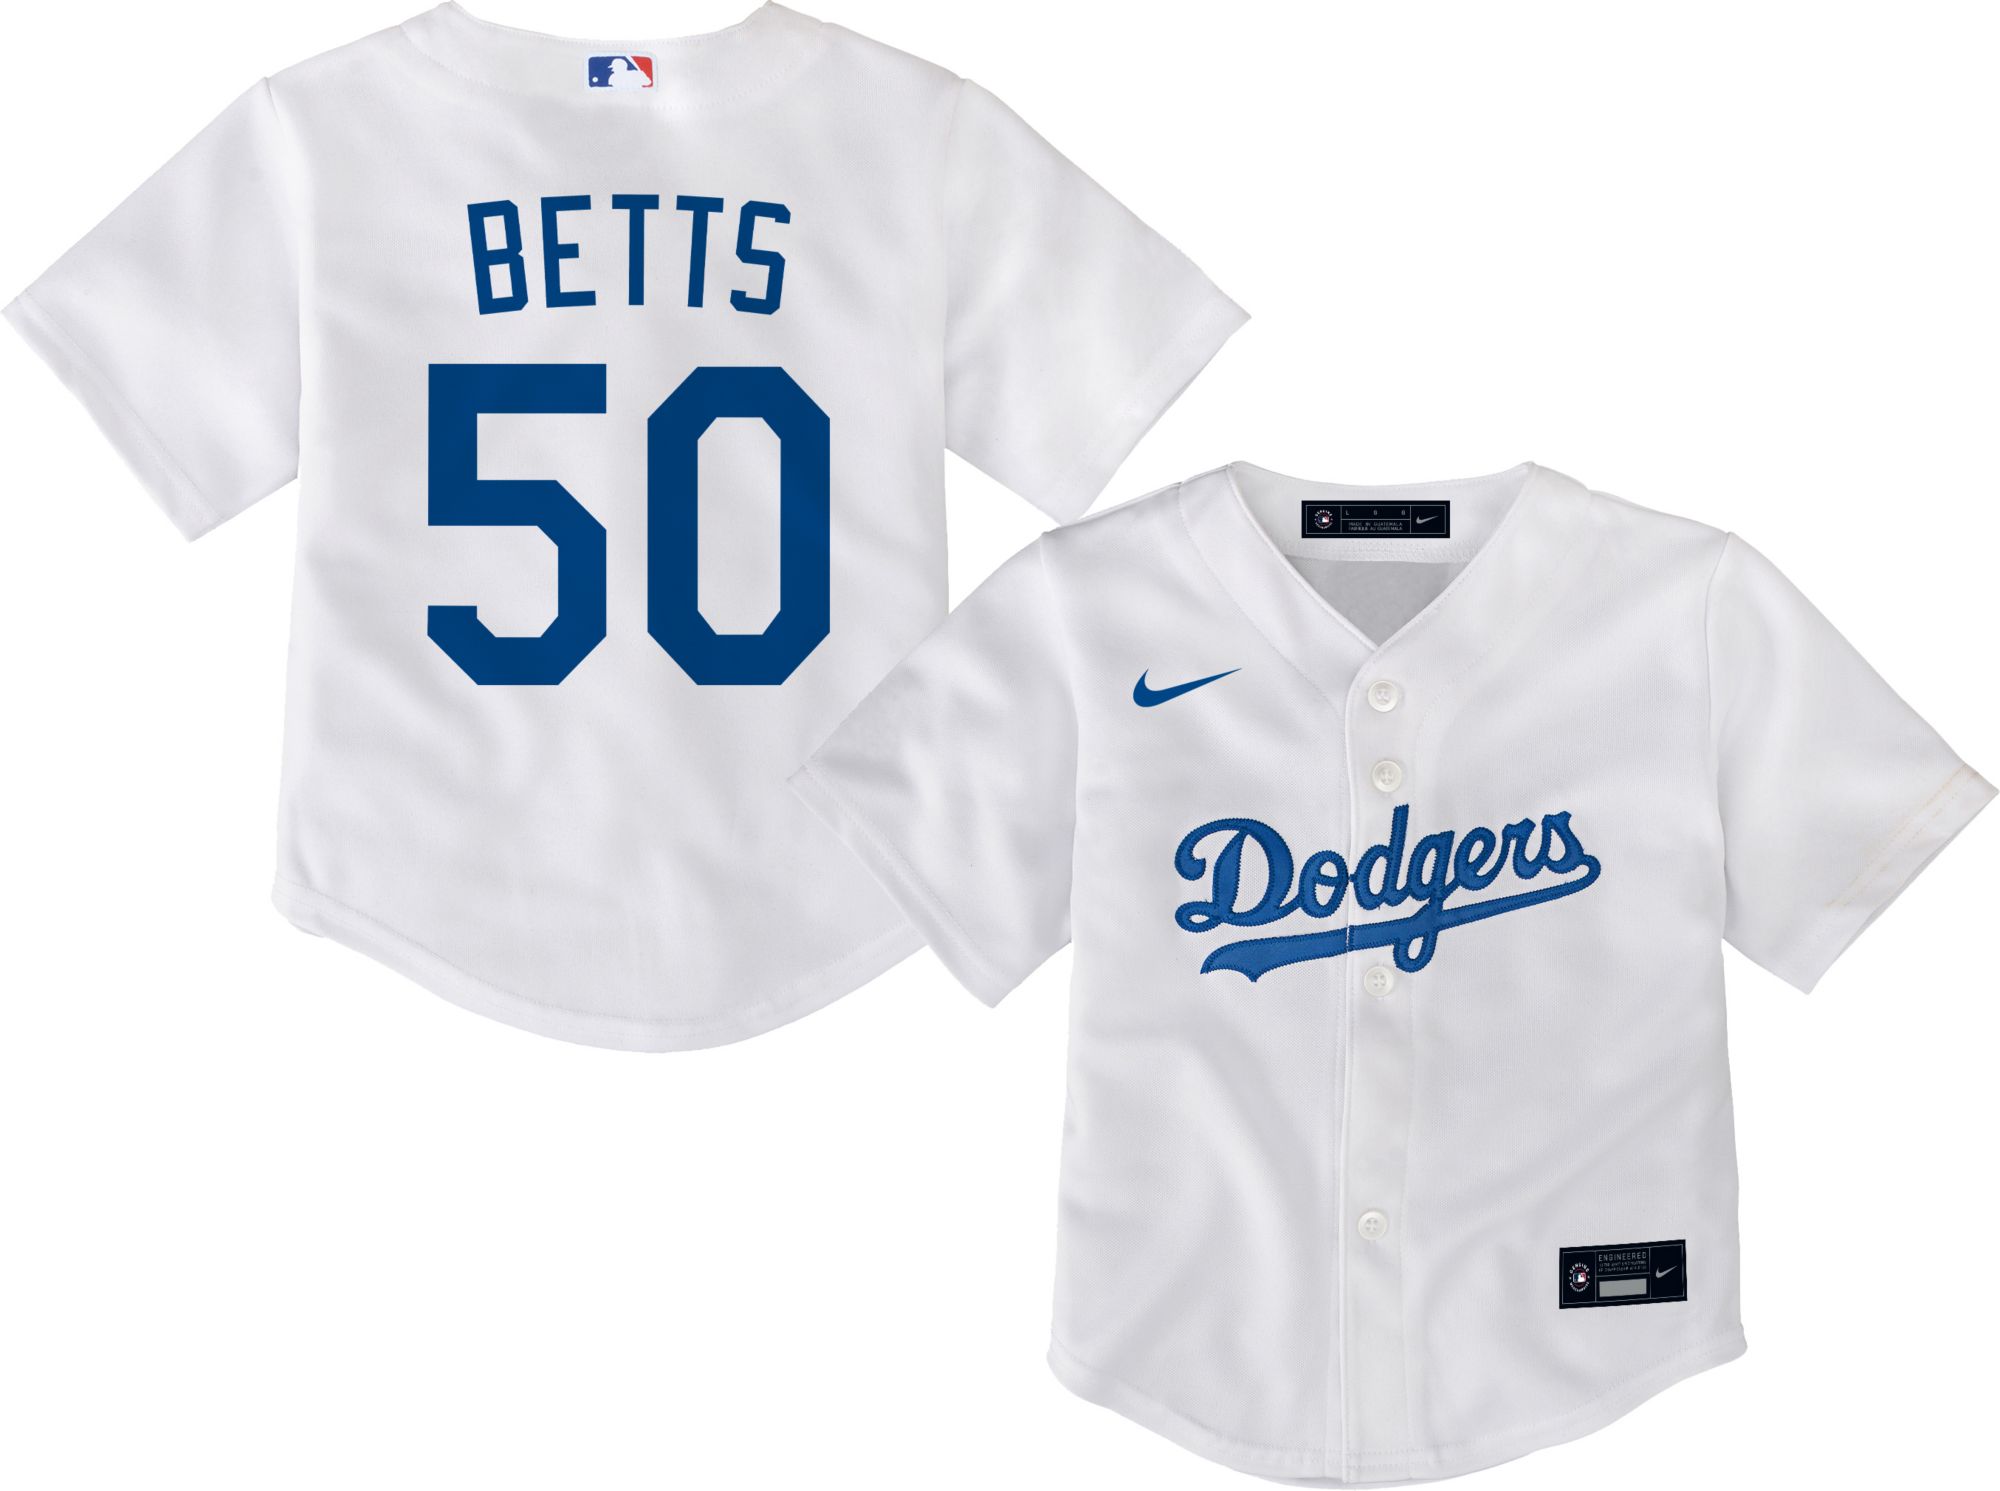 Nike / Toddler Replica Los Angeles Dodgers Mookie Betts #50